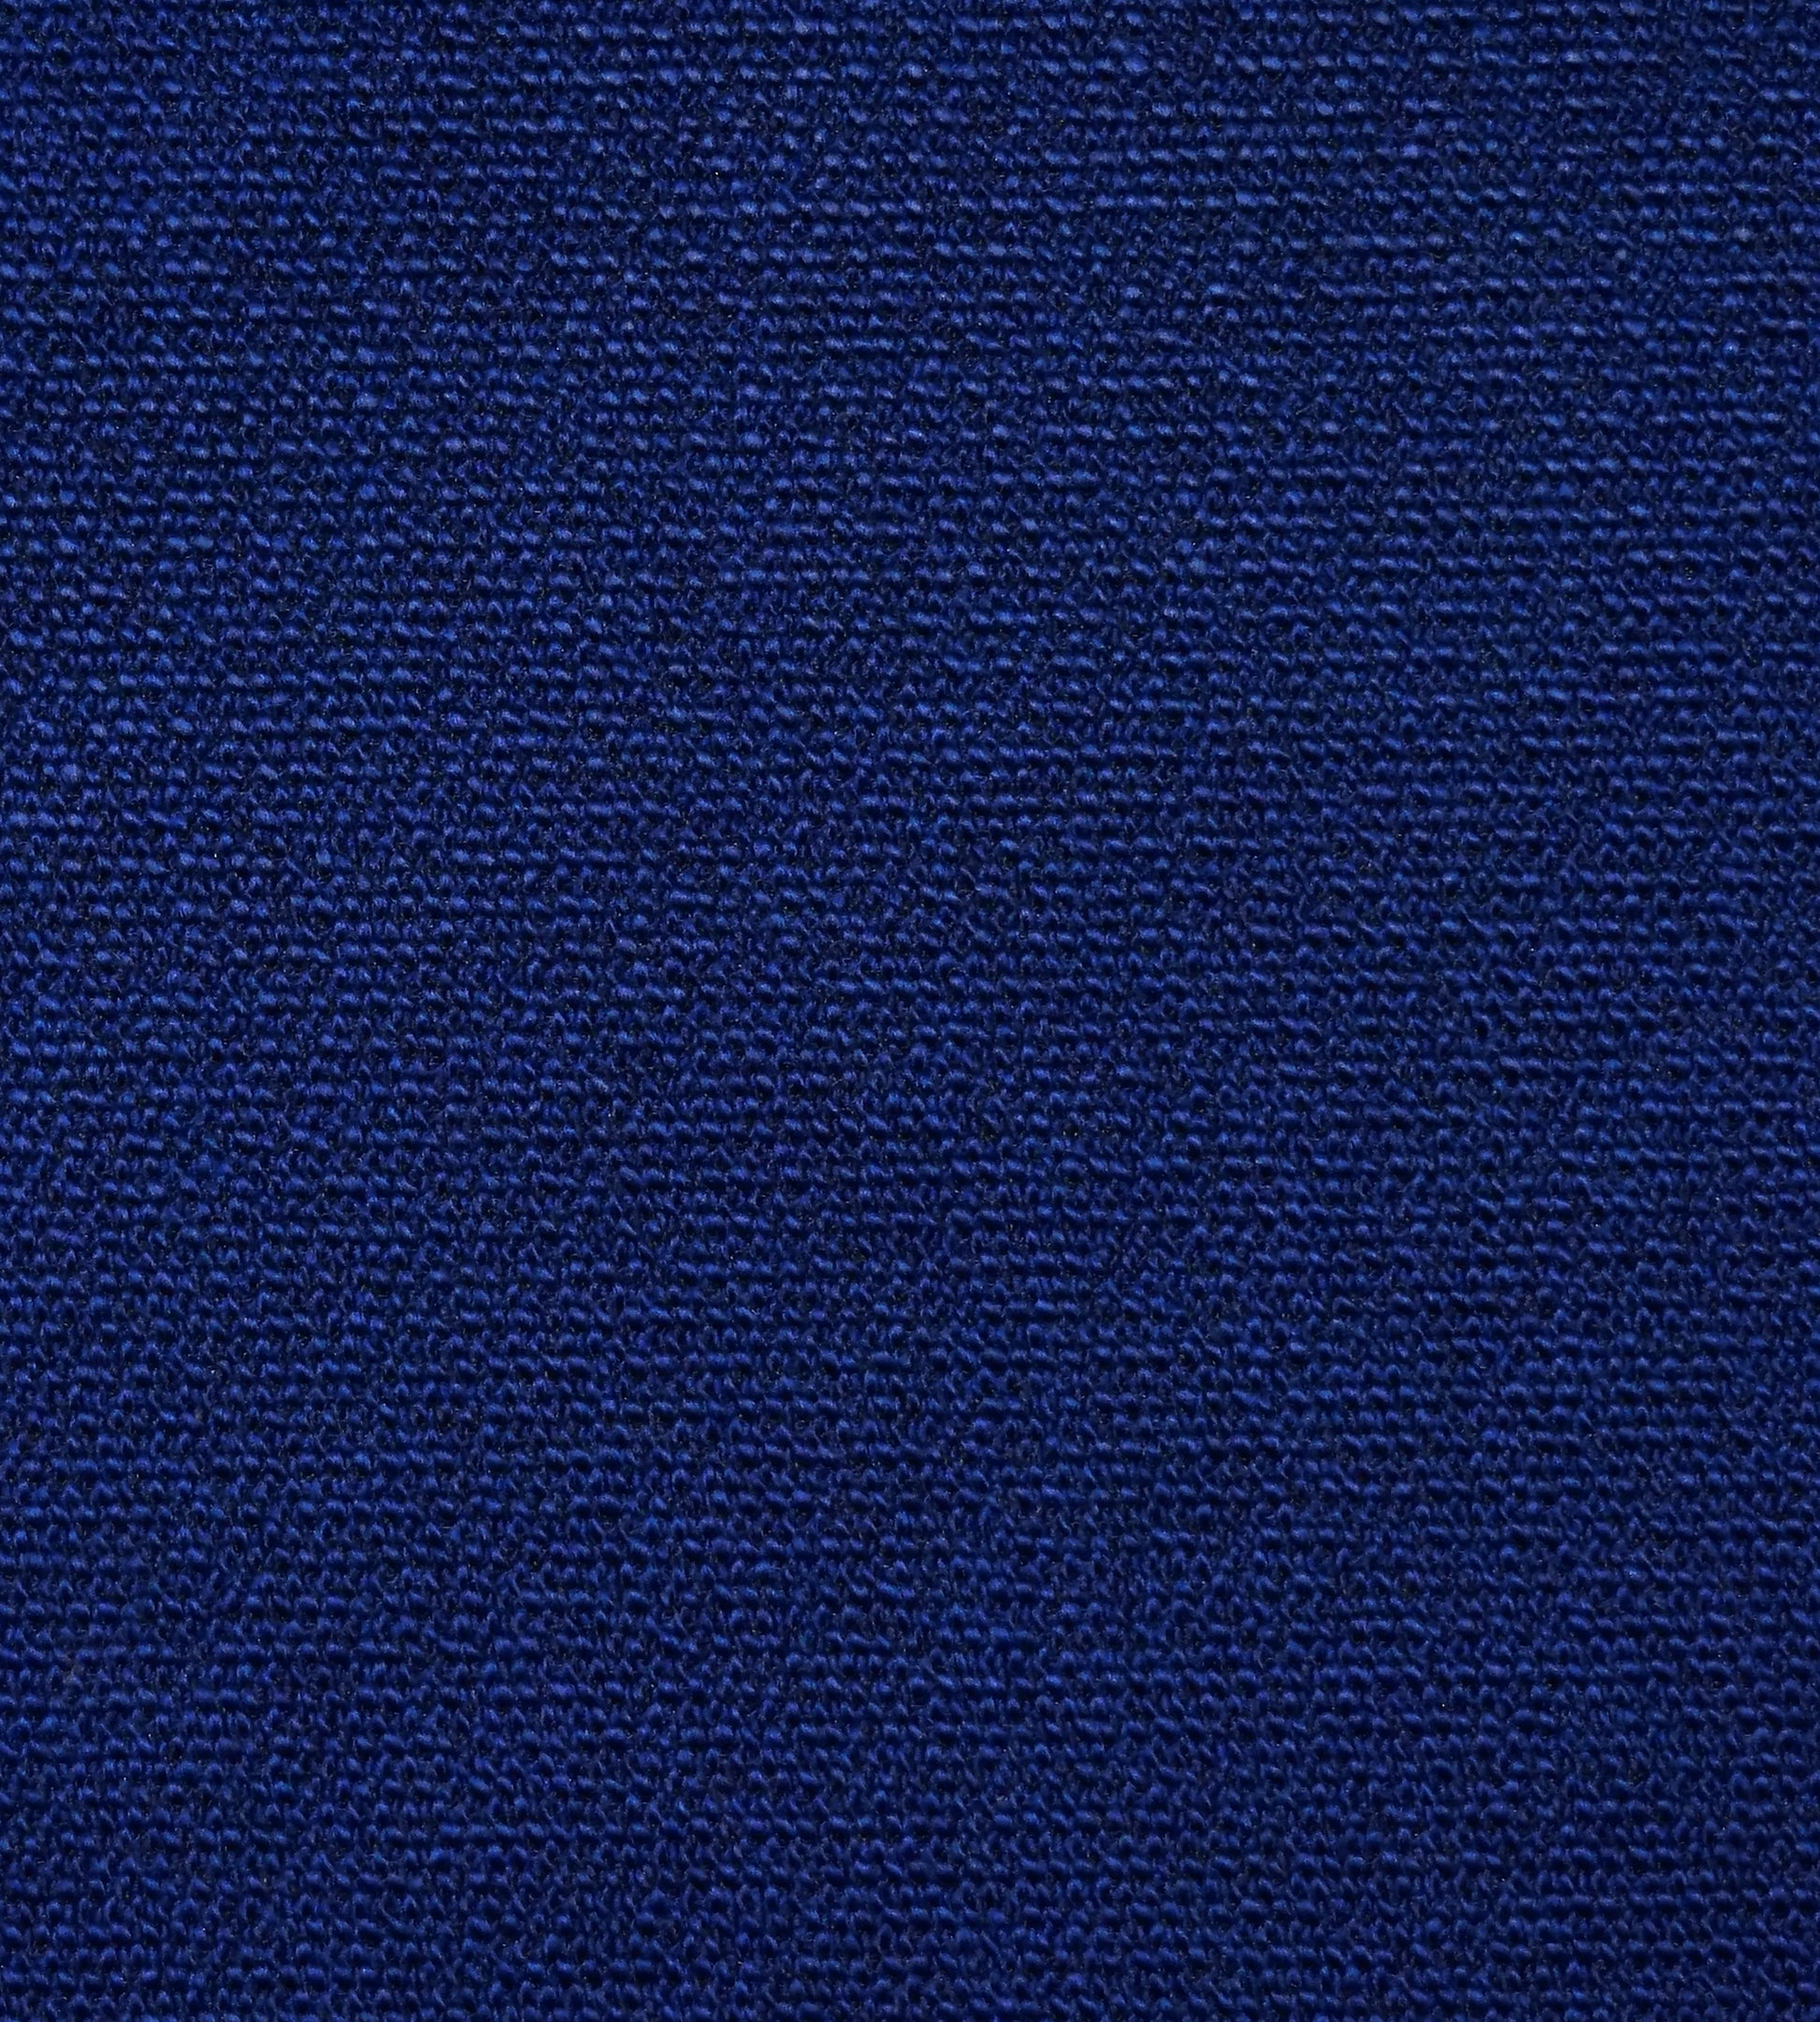 Purchase Scalamandre Fabric Pattern number SC 001627247, Boss Boucle Ultramarine 1